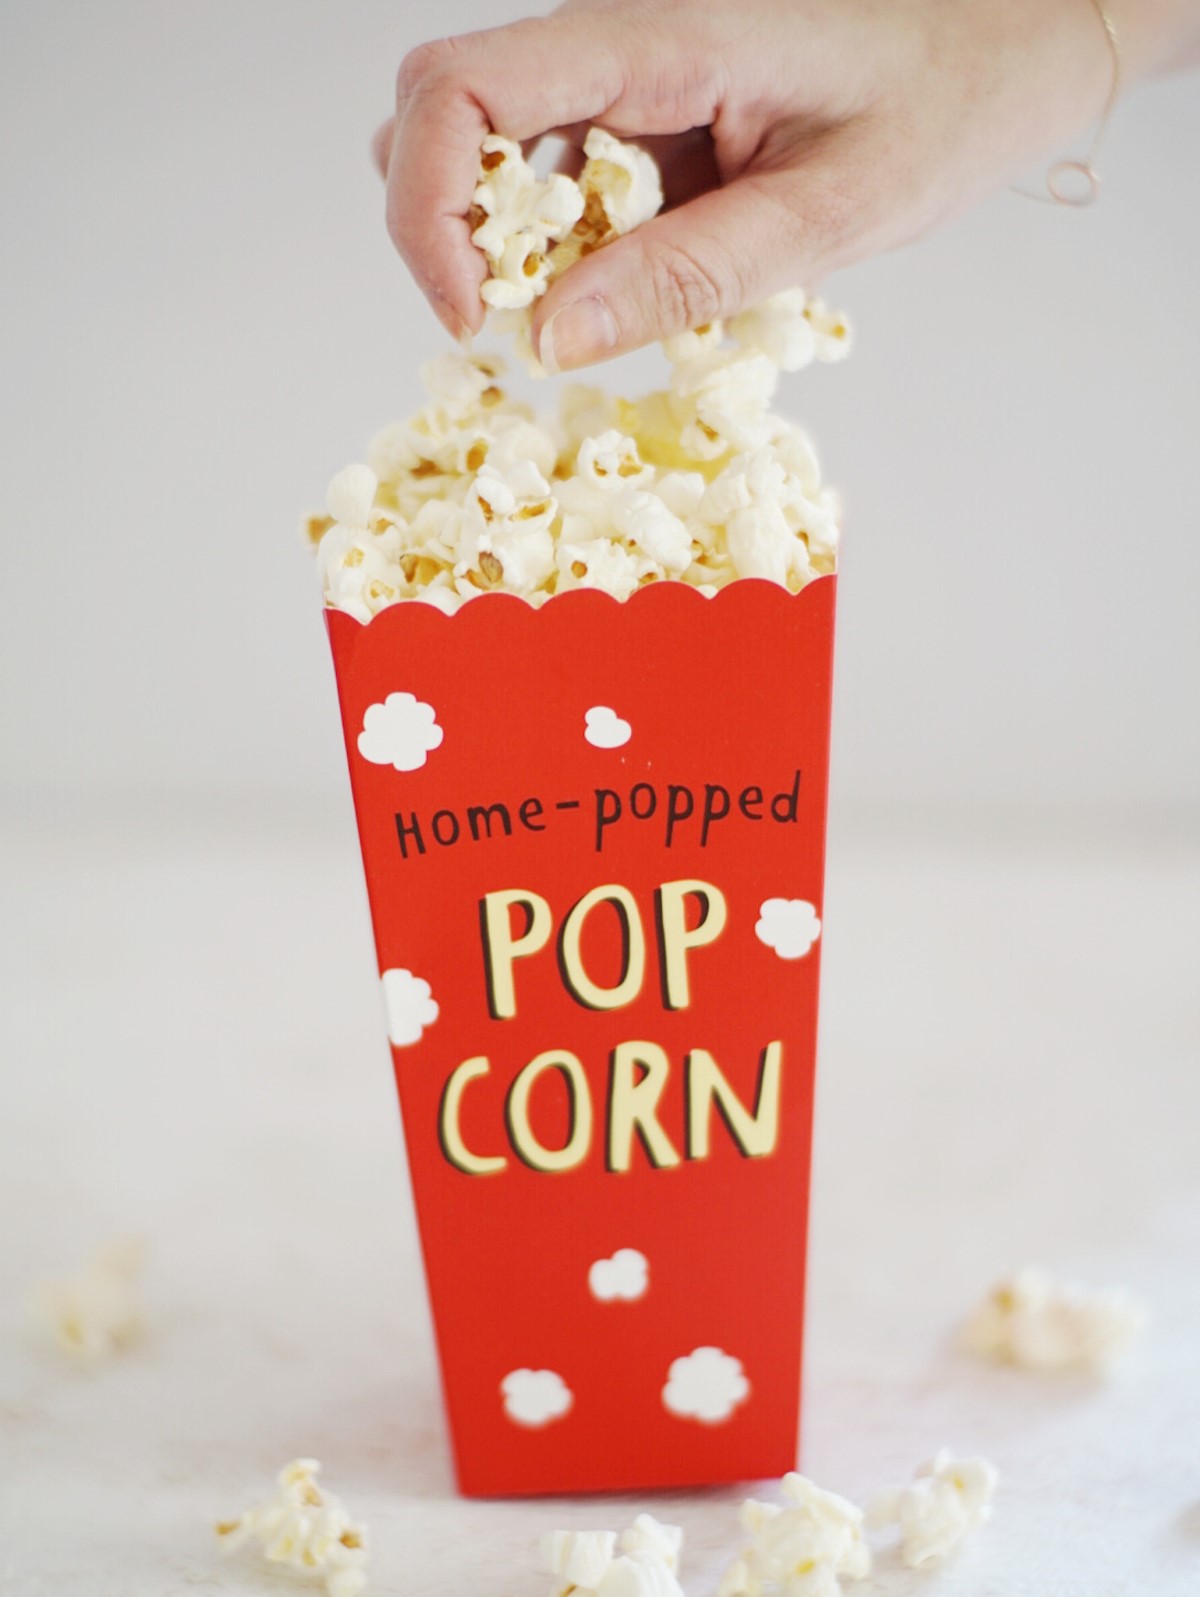 Hausgemachtes Popcorn - Title of the Recipe